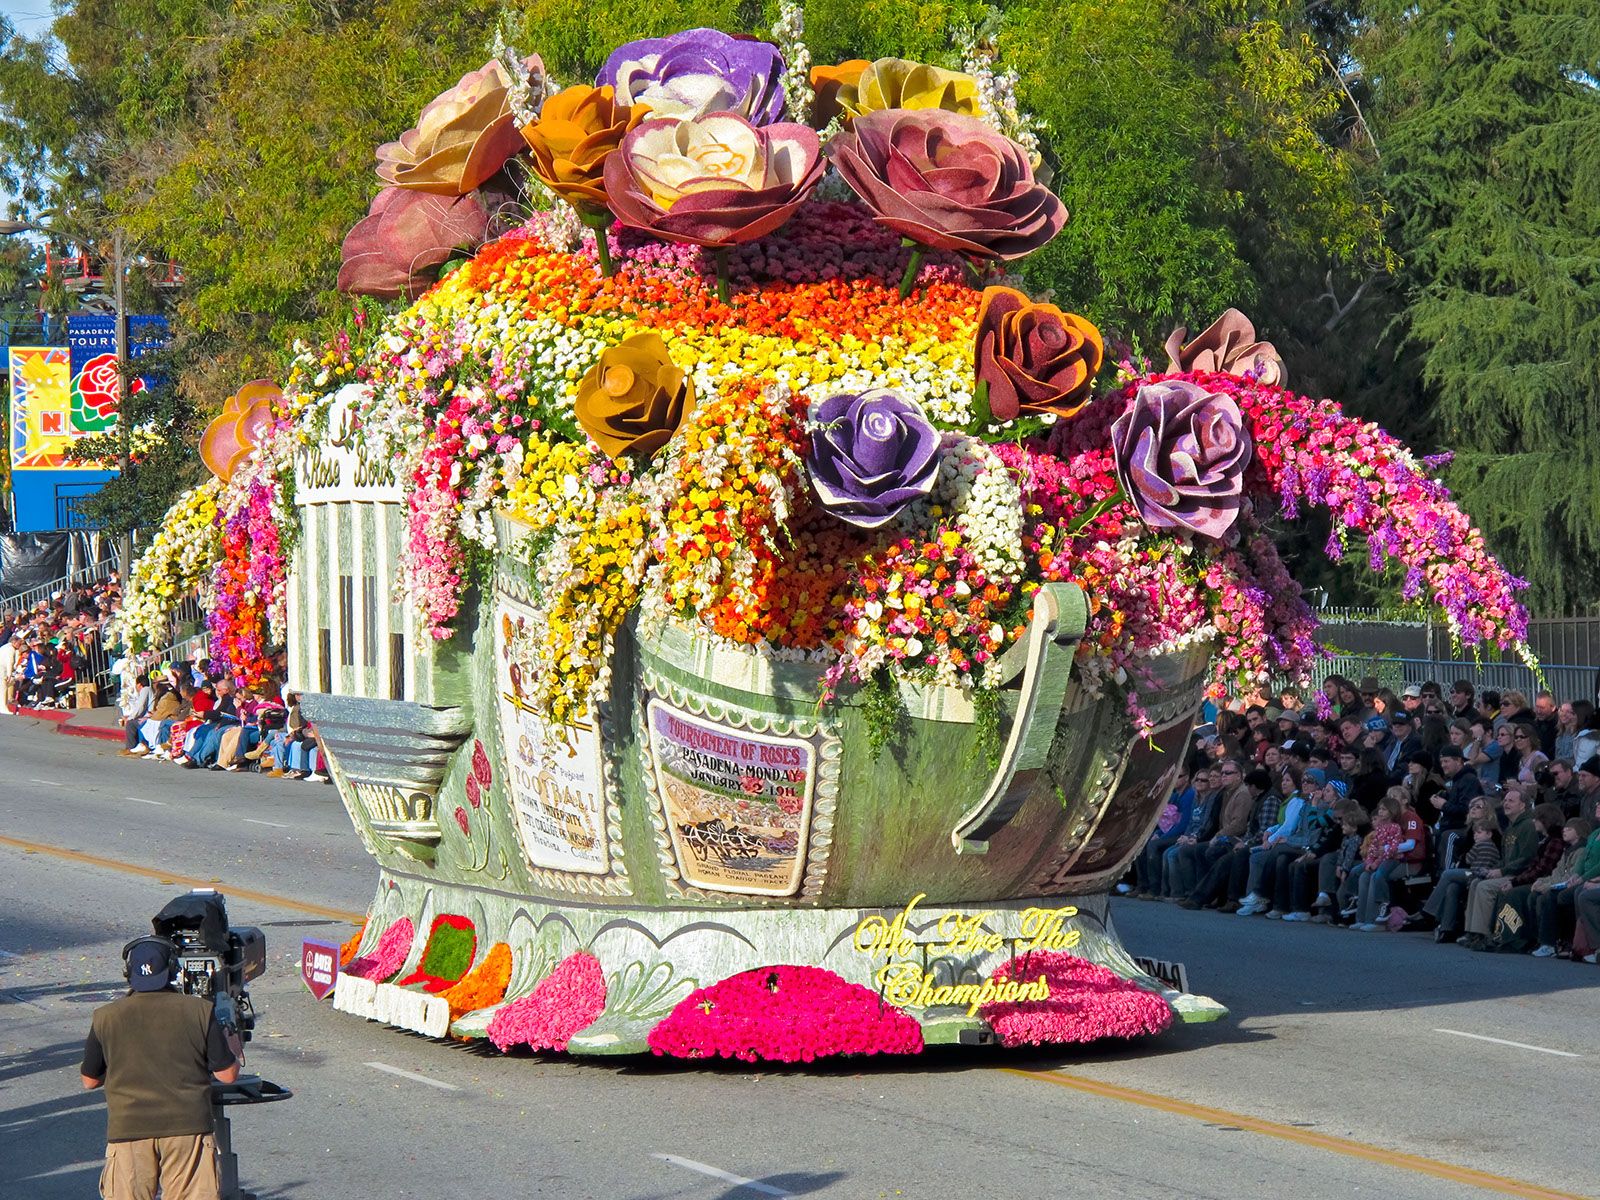 Rose Parade Float | Parade Floats | Pinterest | Rose, Rose bowl ...